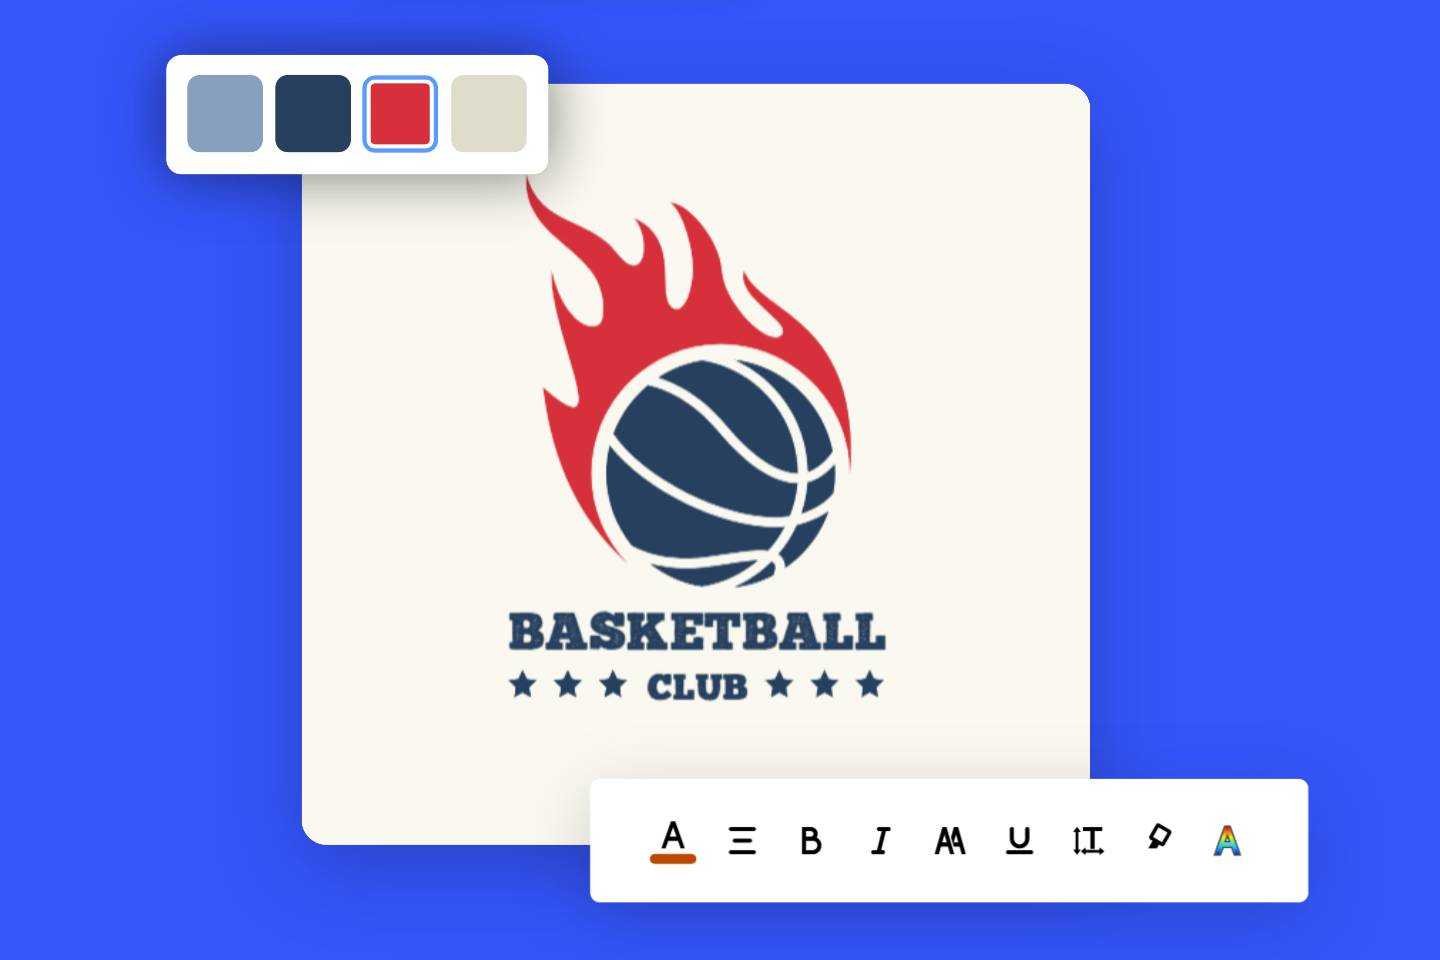 custom basketball logos